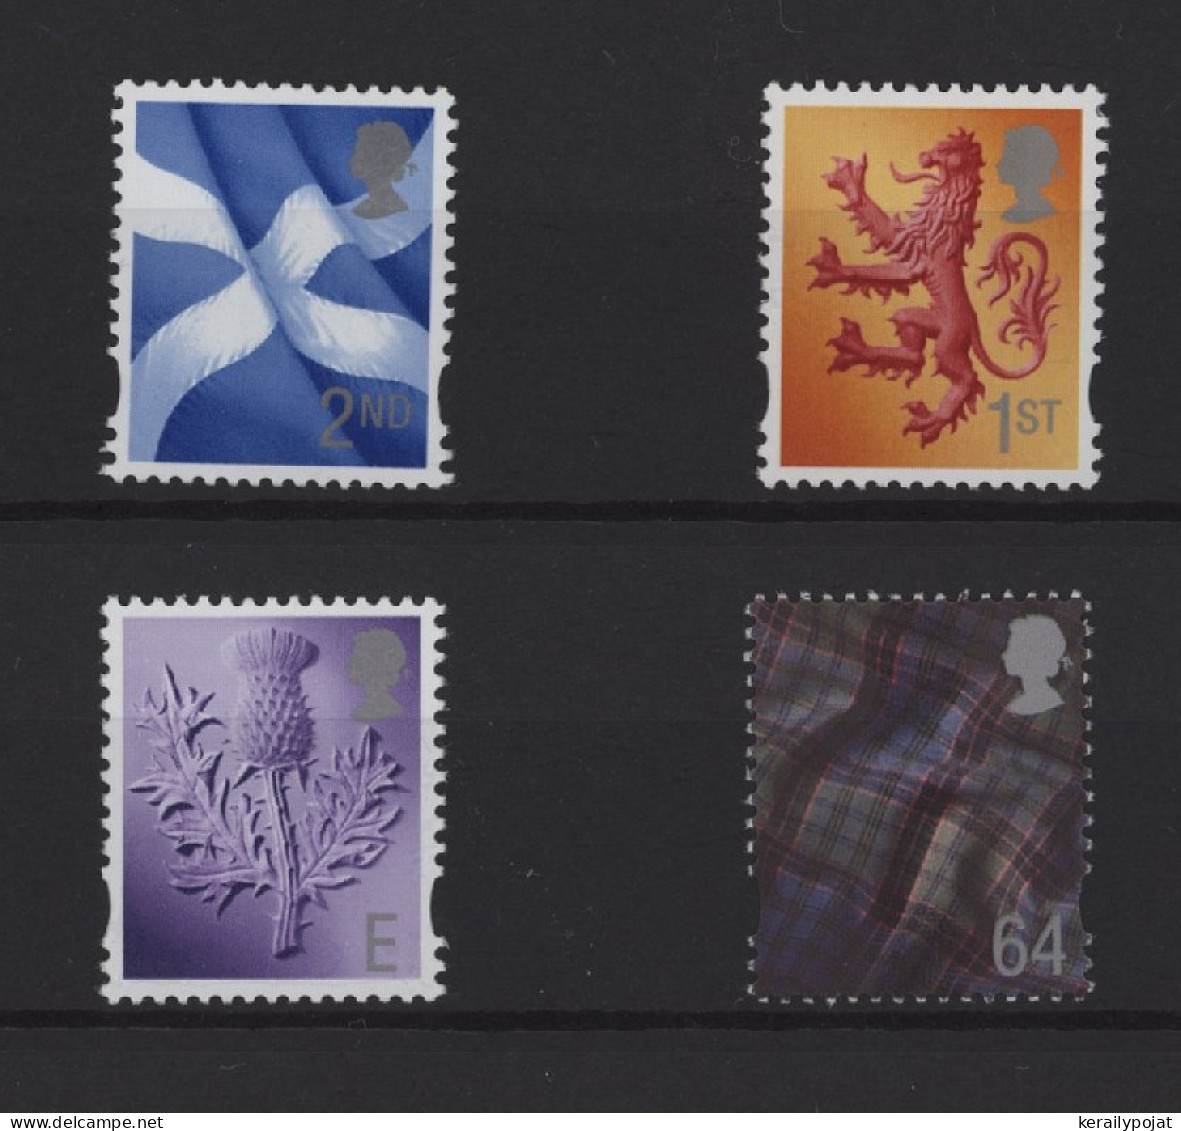 Scotland - 2003 National Symbols MNH__(TH-25852) - Scotland